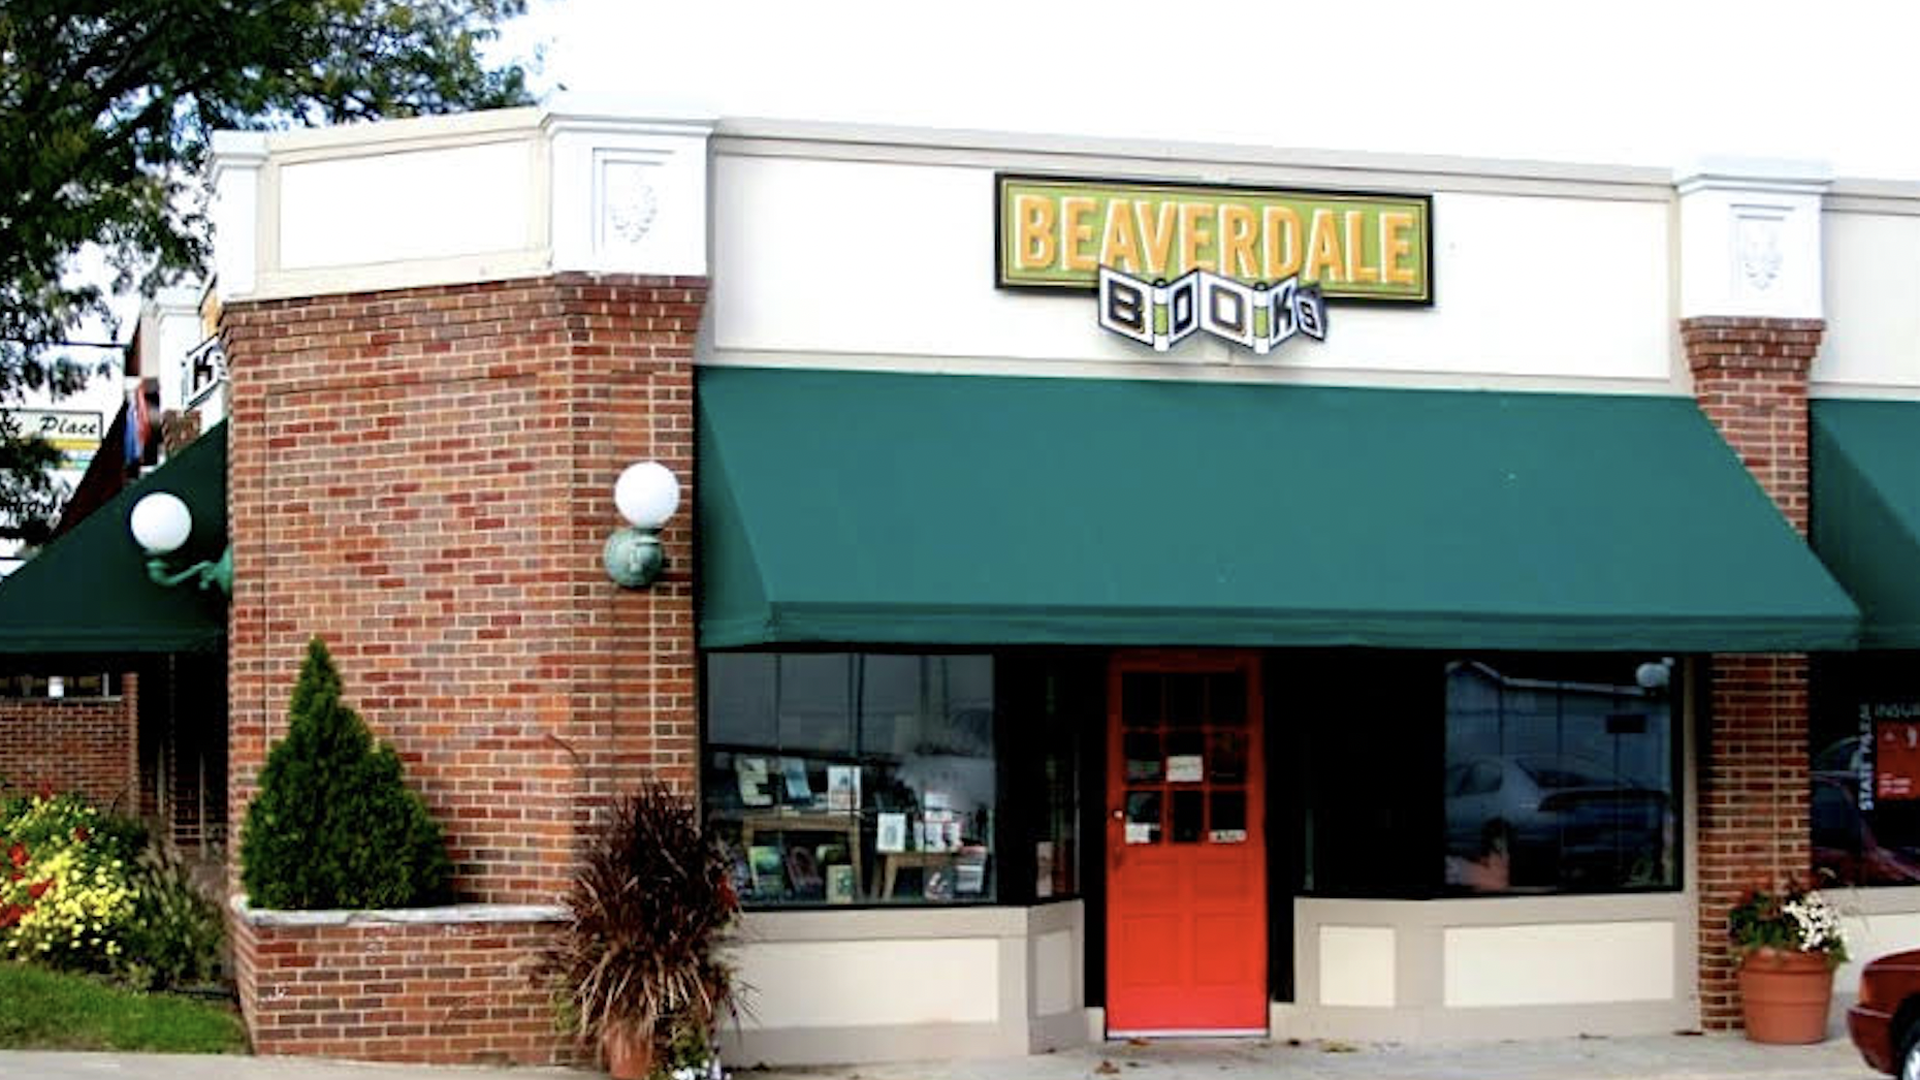 The storefront of Beaverdale Books